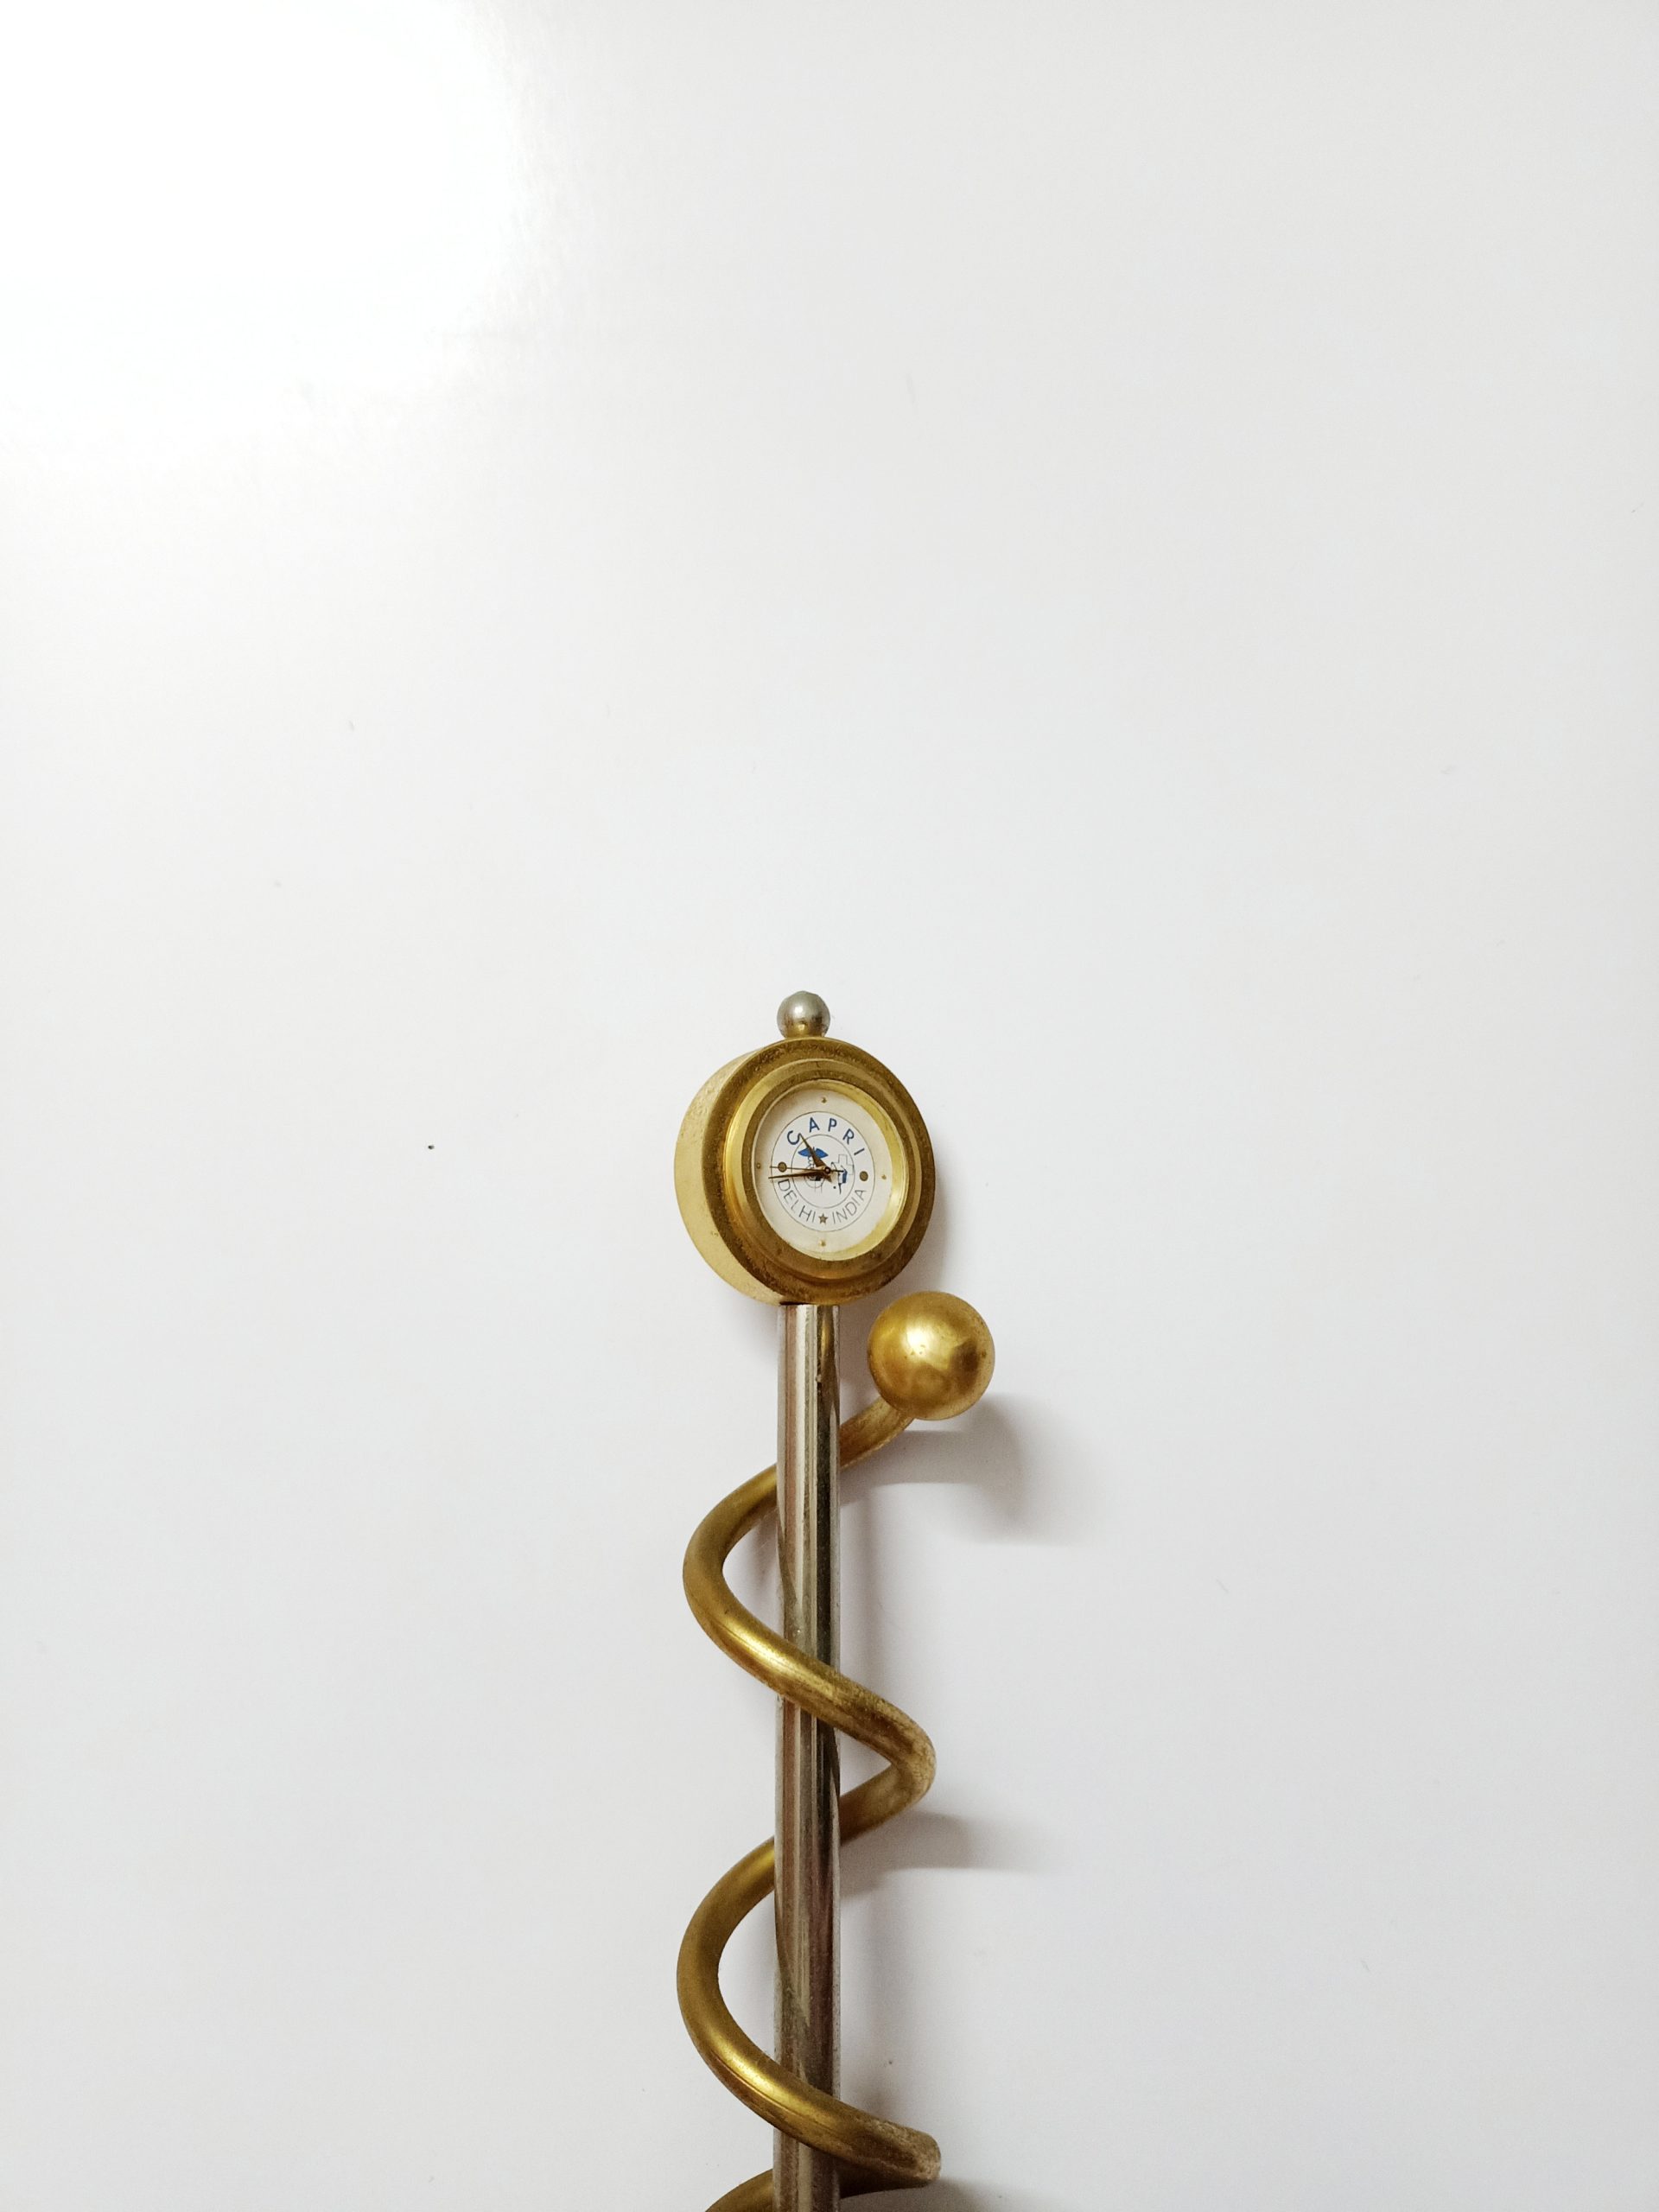 Artifact craft for a clock